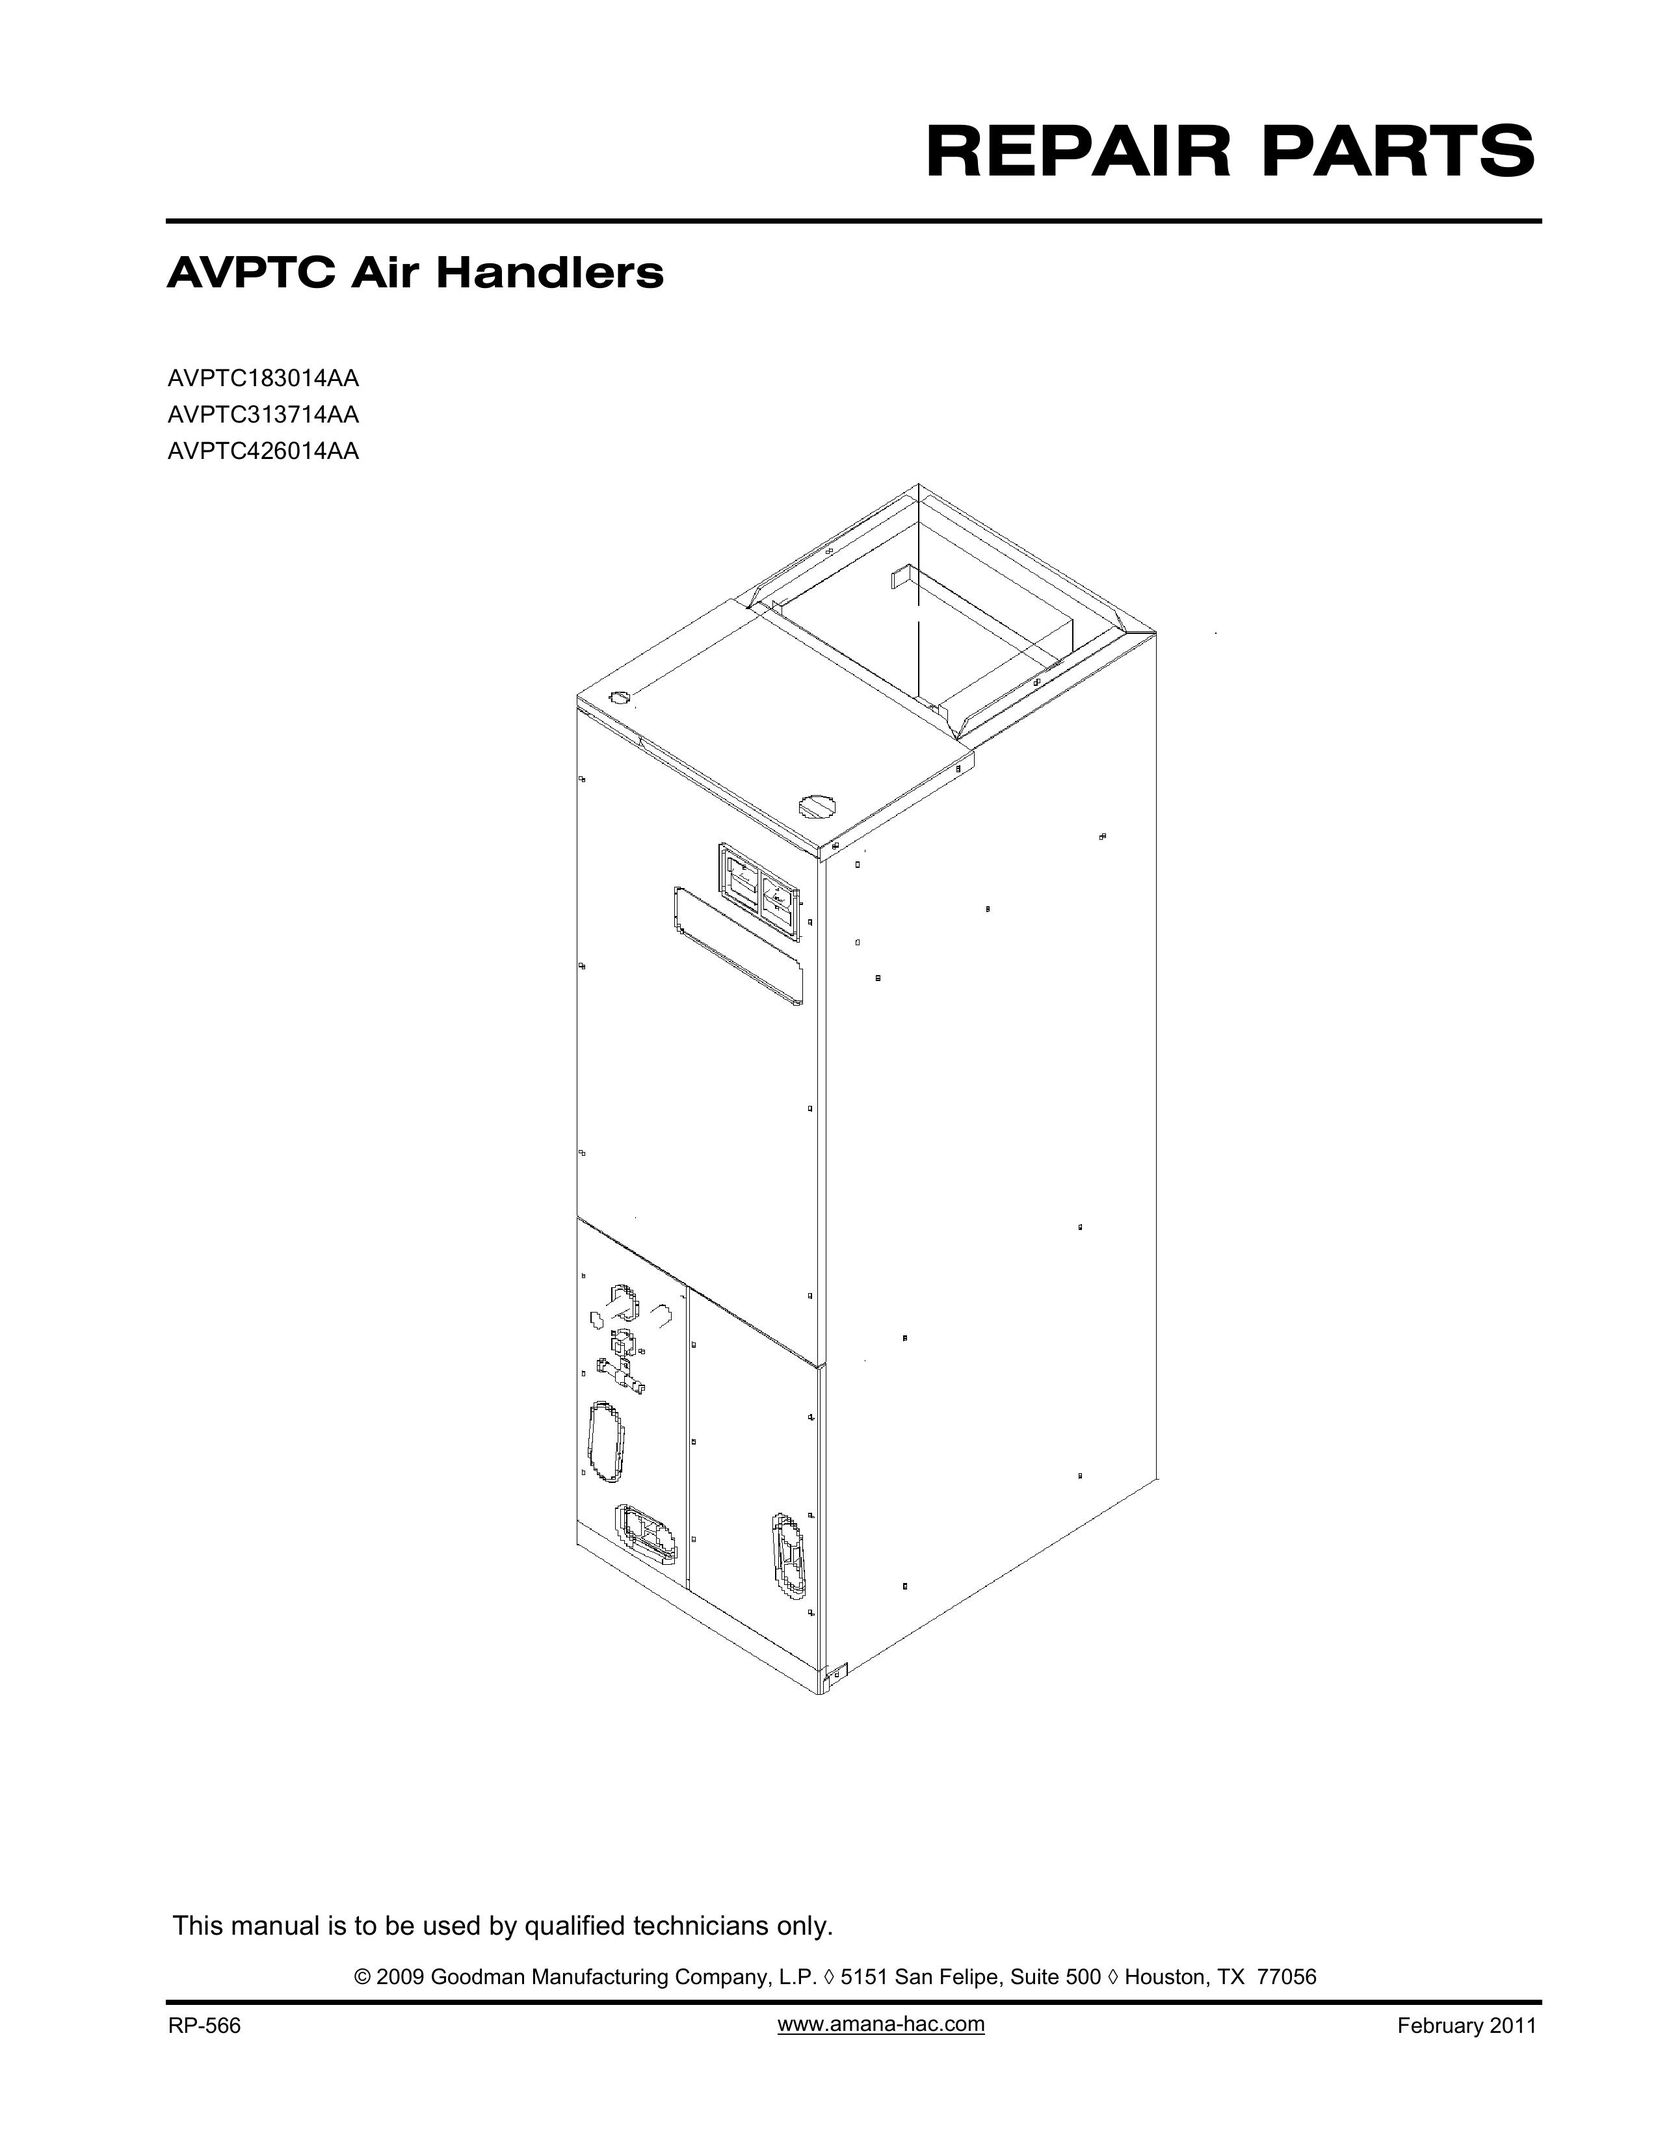 Goodman Mfg AVPTC183014AA Air Conditioner User Manual